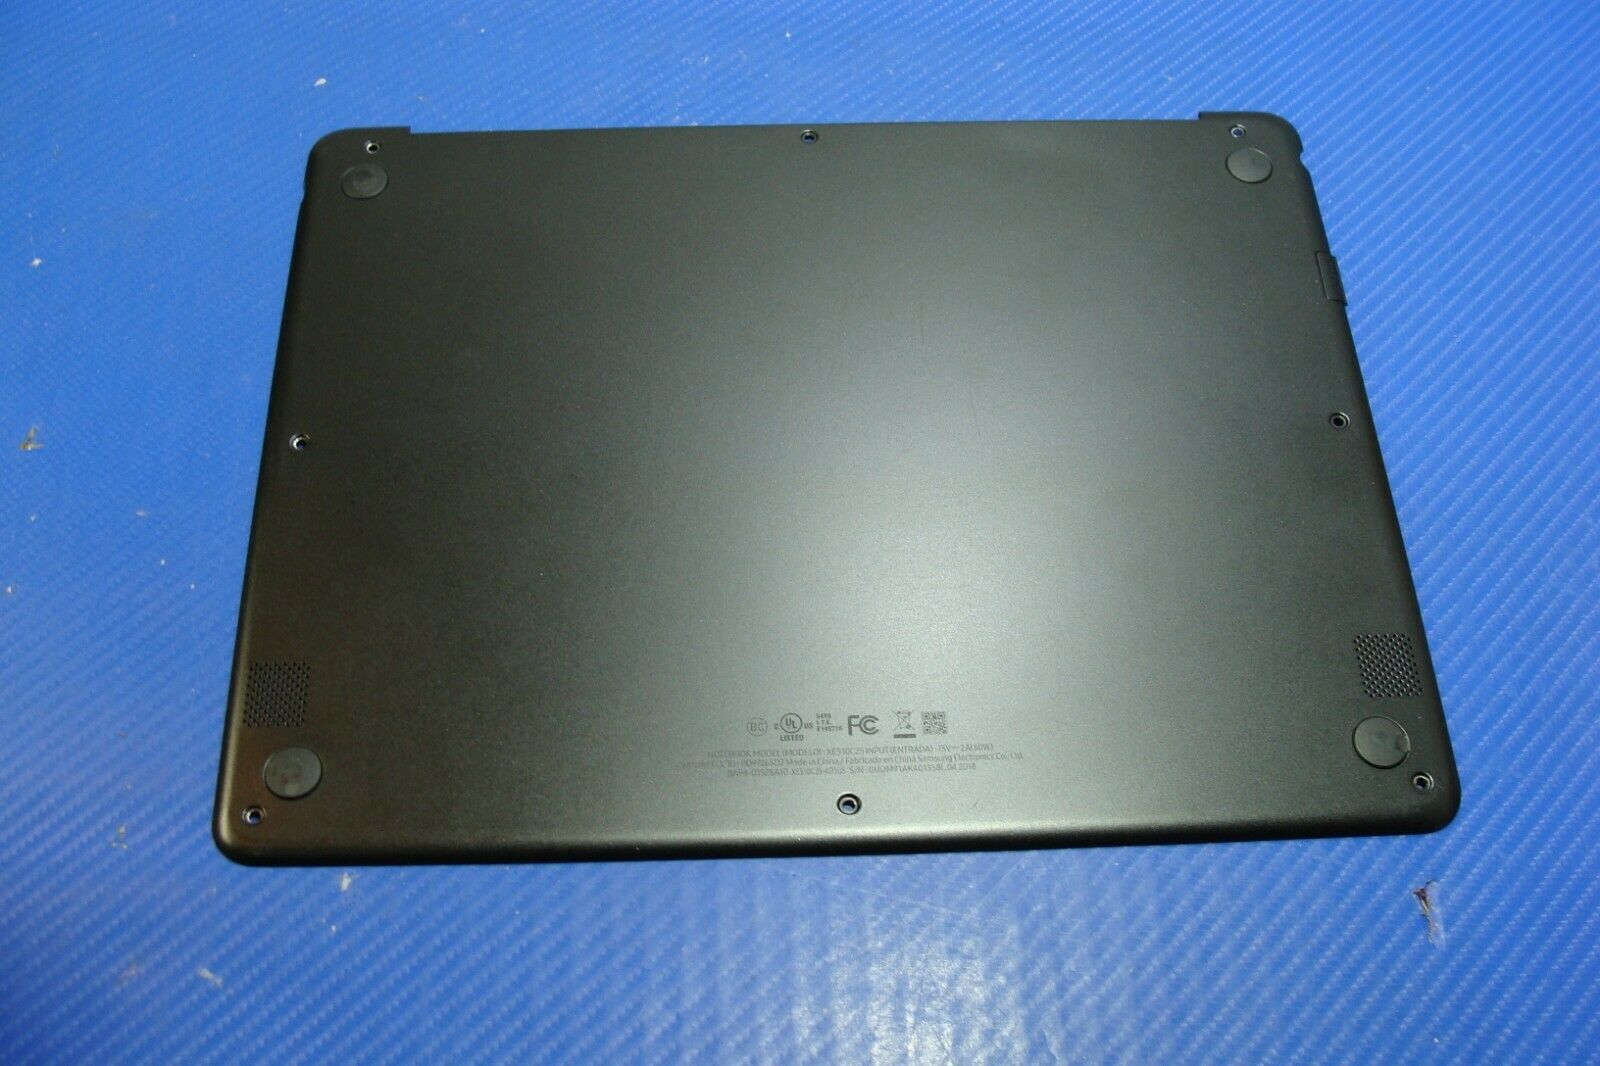 Samsung Chromebook XE510C25-K01US 12.3